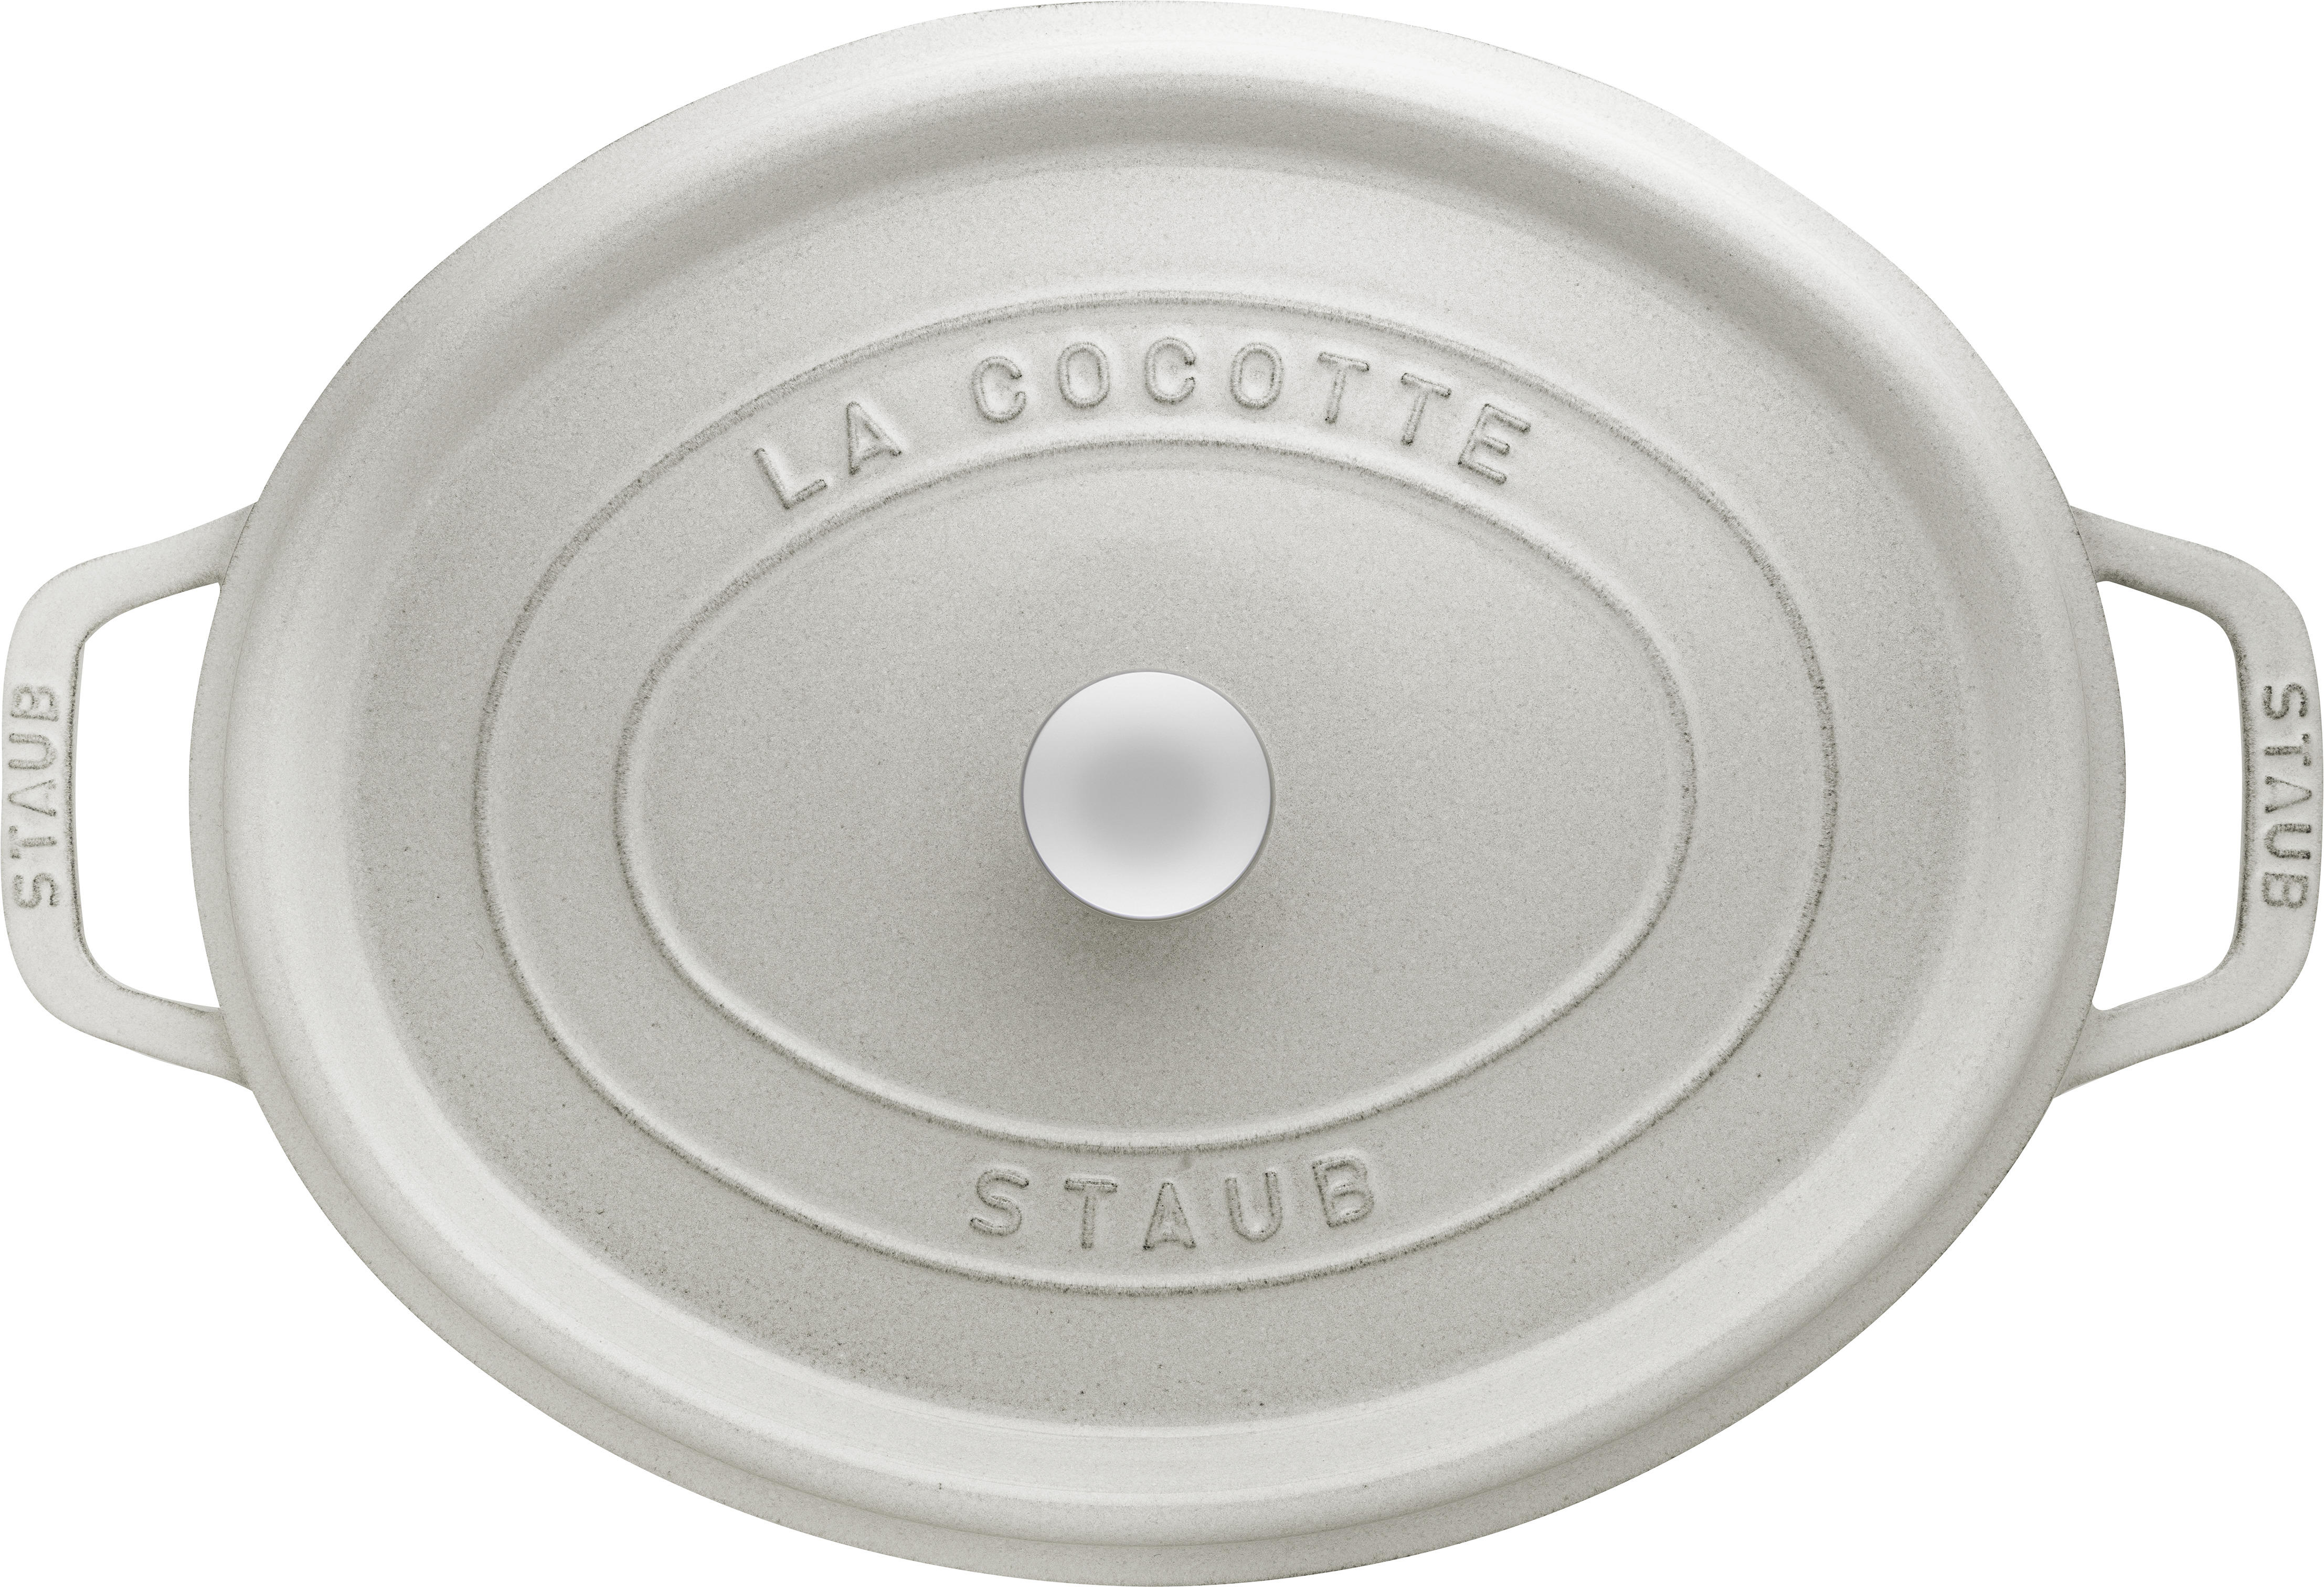 BRÄTER LA COCOTTE White Truffel  - Weiß, Basics, Metall (22,5/29cm) - Staub